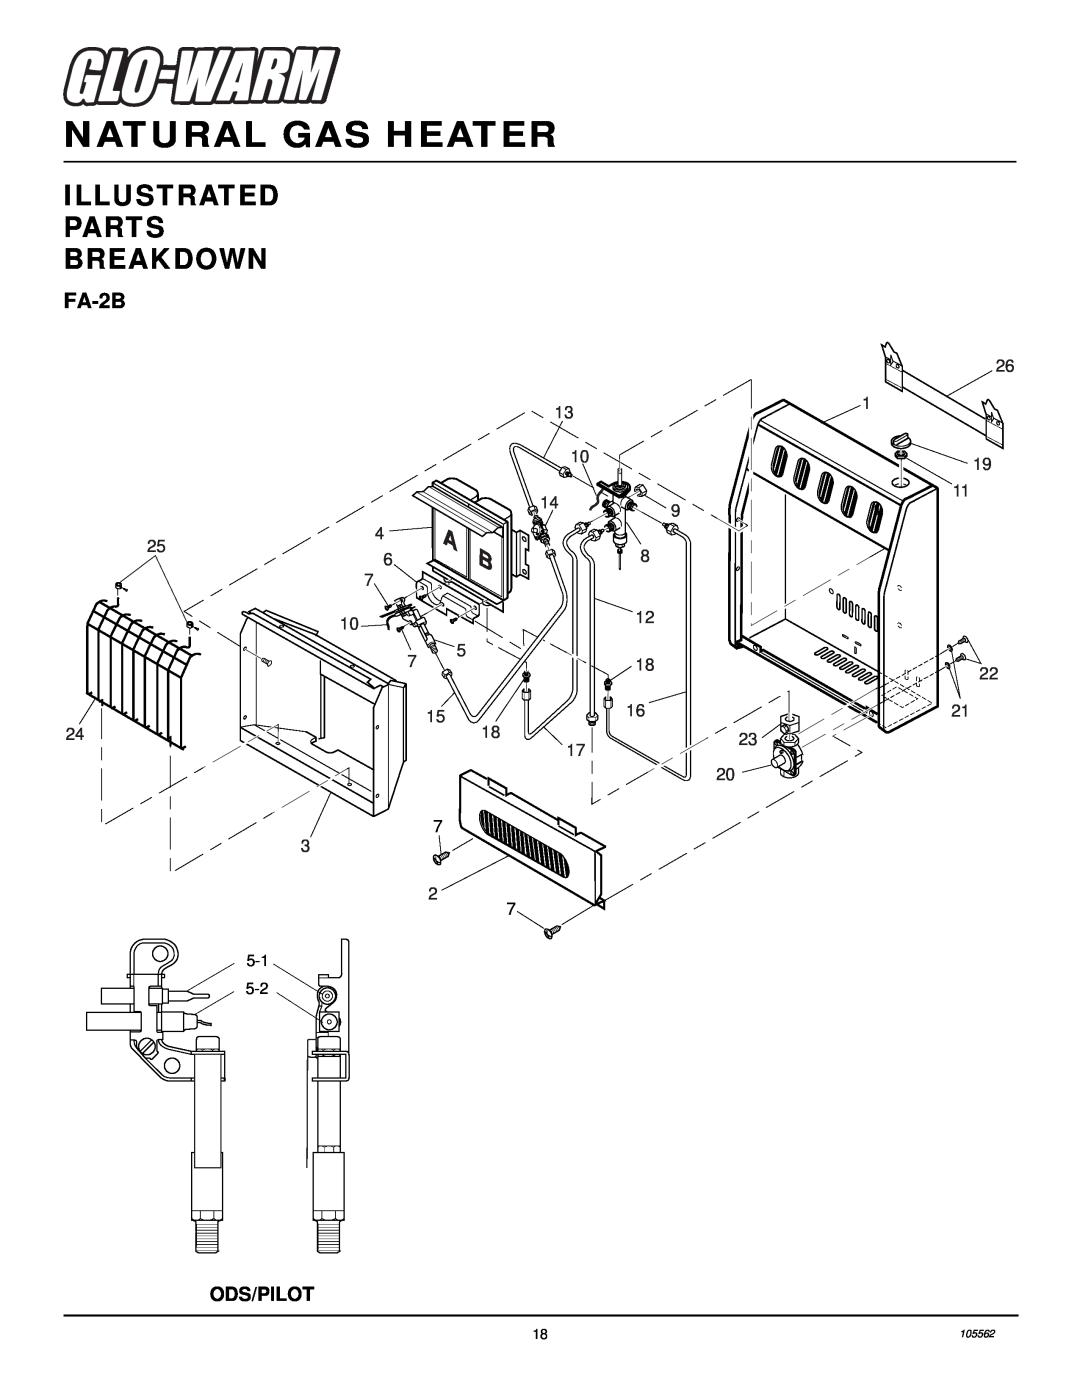 Desa FA-2B installation manual Illustrated Parts Breakdown, Natural Gas Heater, 105562 